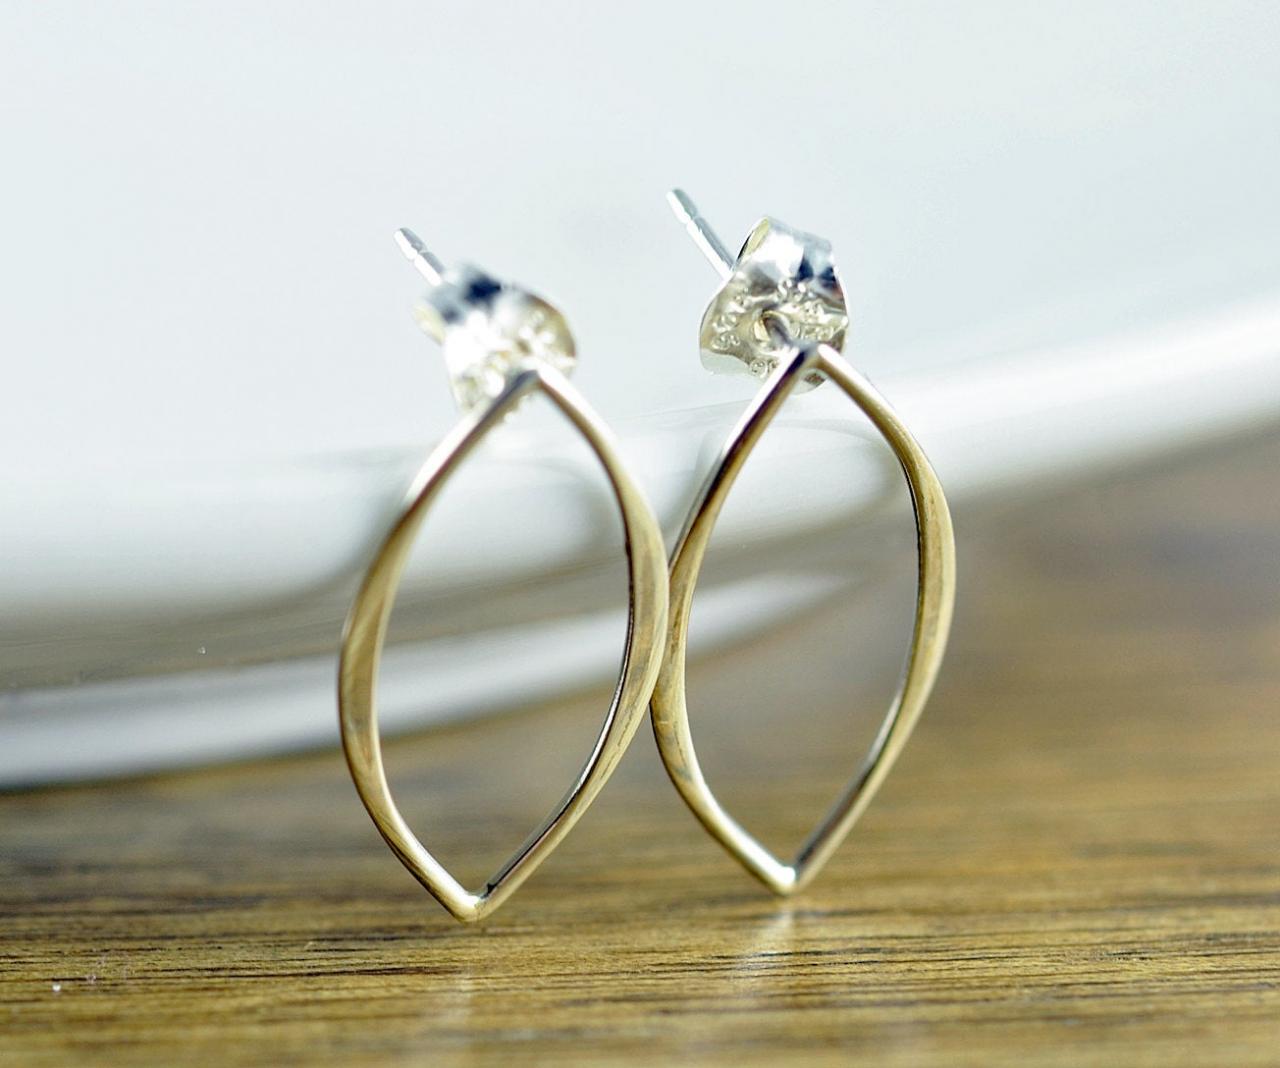 Earrings - Sterling Silver Marquis Earrings - Modern Earrings - Round Link - Round Connector - Earring Part - Geometric - Infinity Earrings